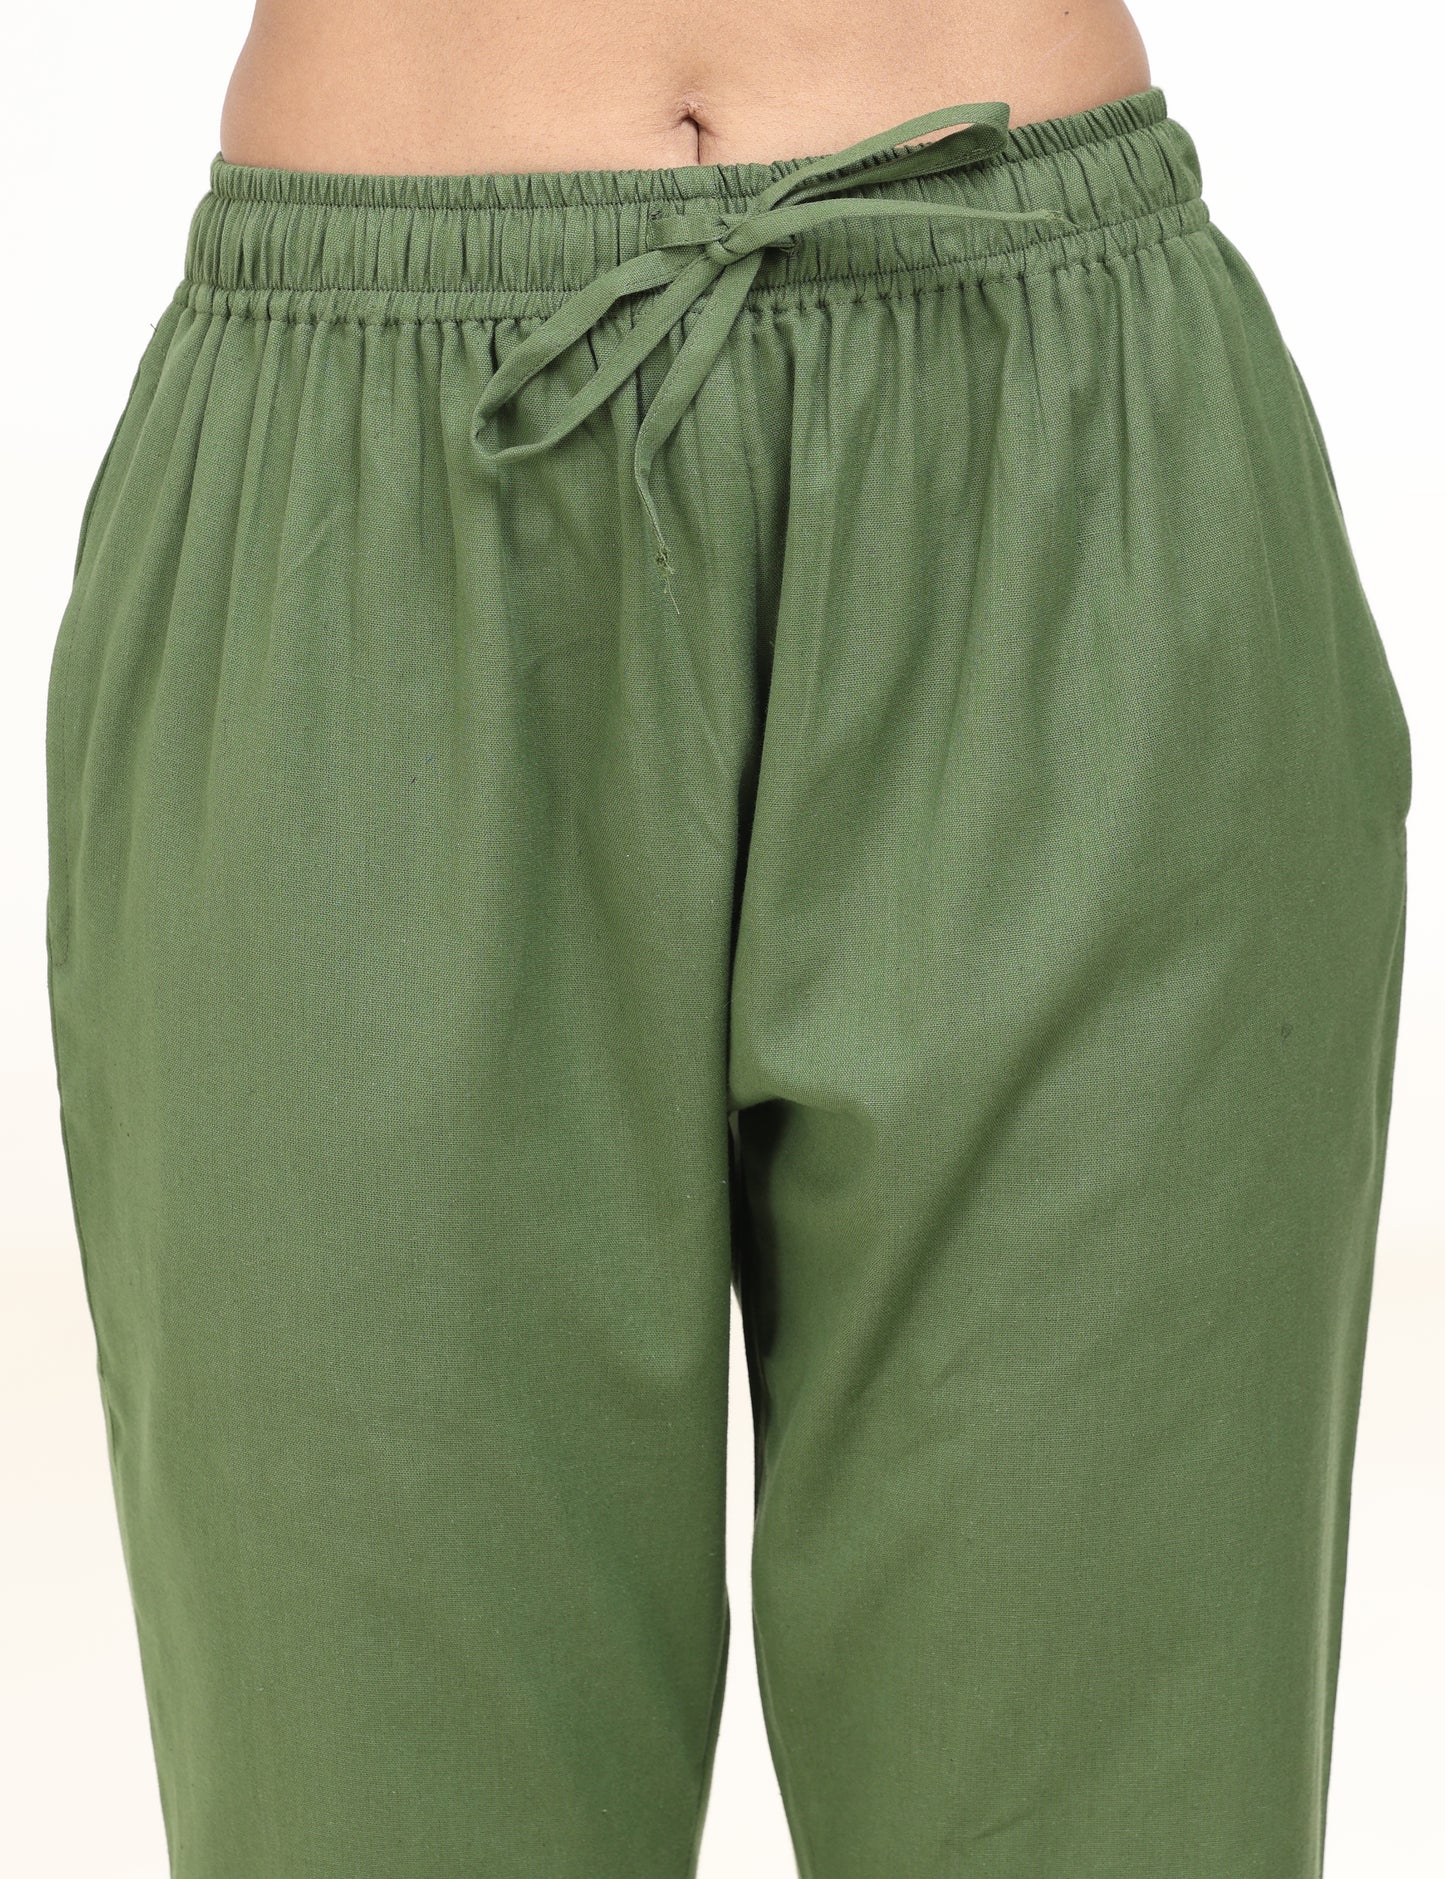 Tamara Every Day Cotton Pants - Green